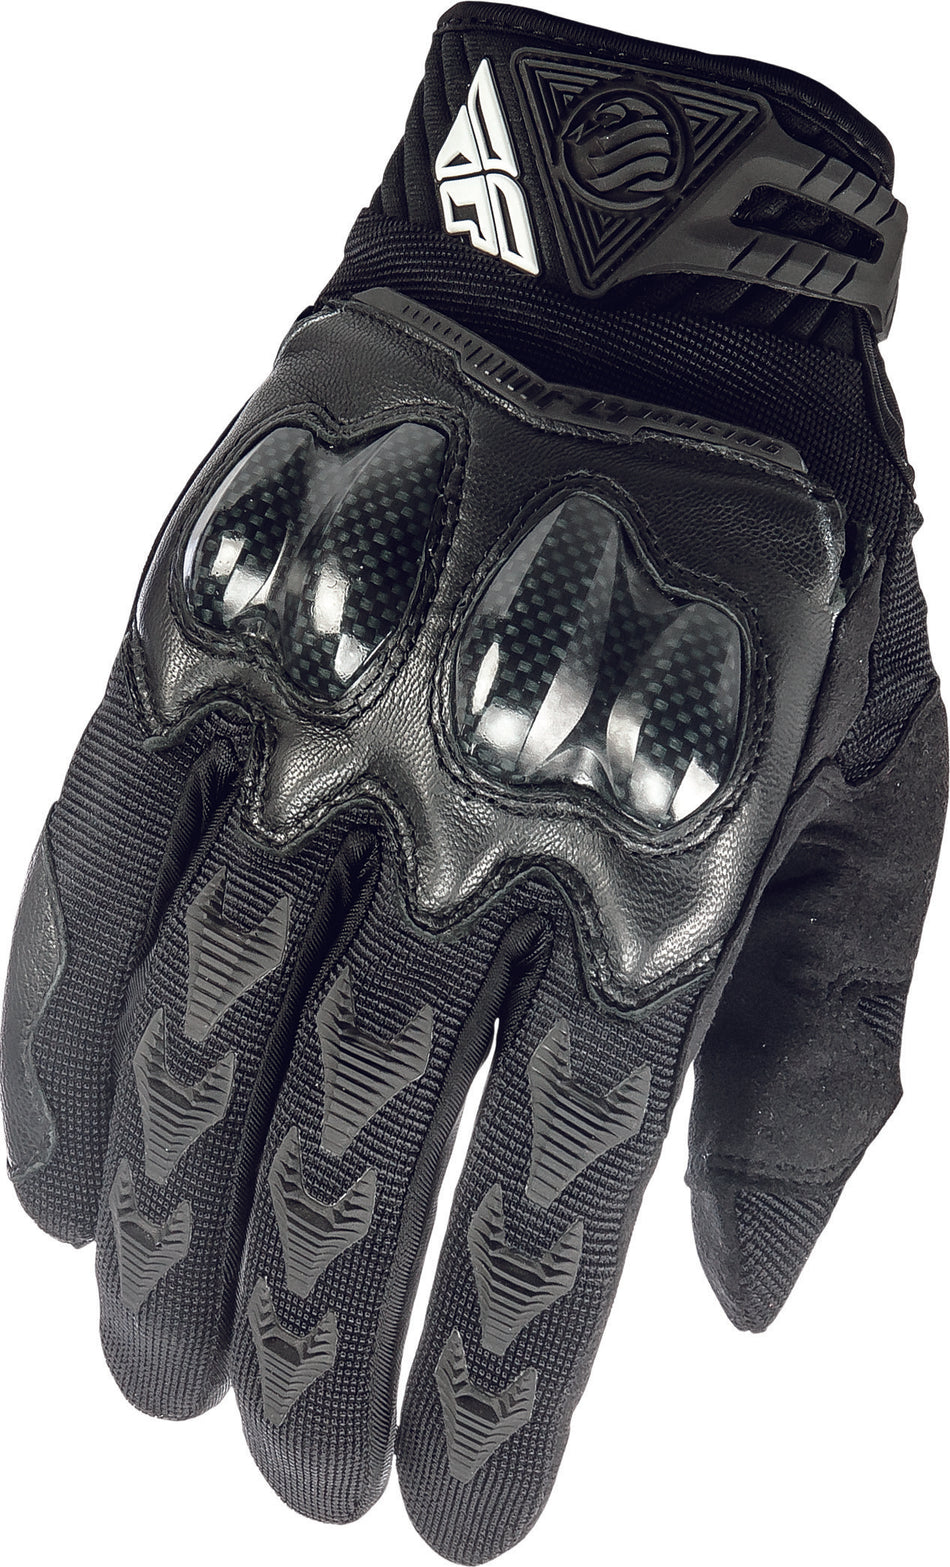 FLY RACING Patrol Xc Gloves Black Sz 9 369-06009